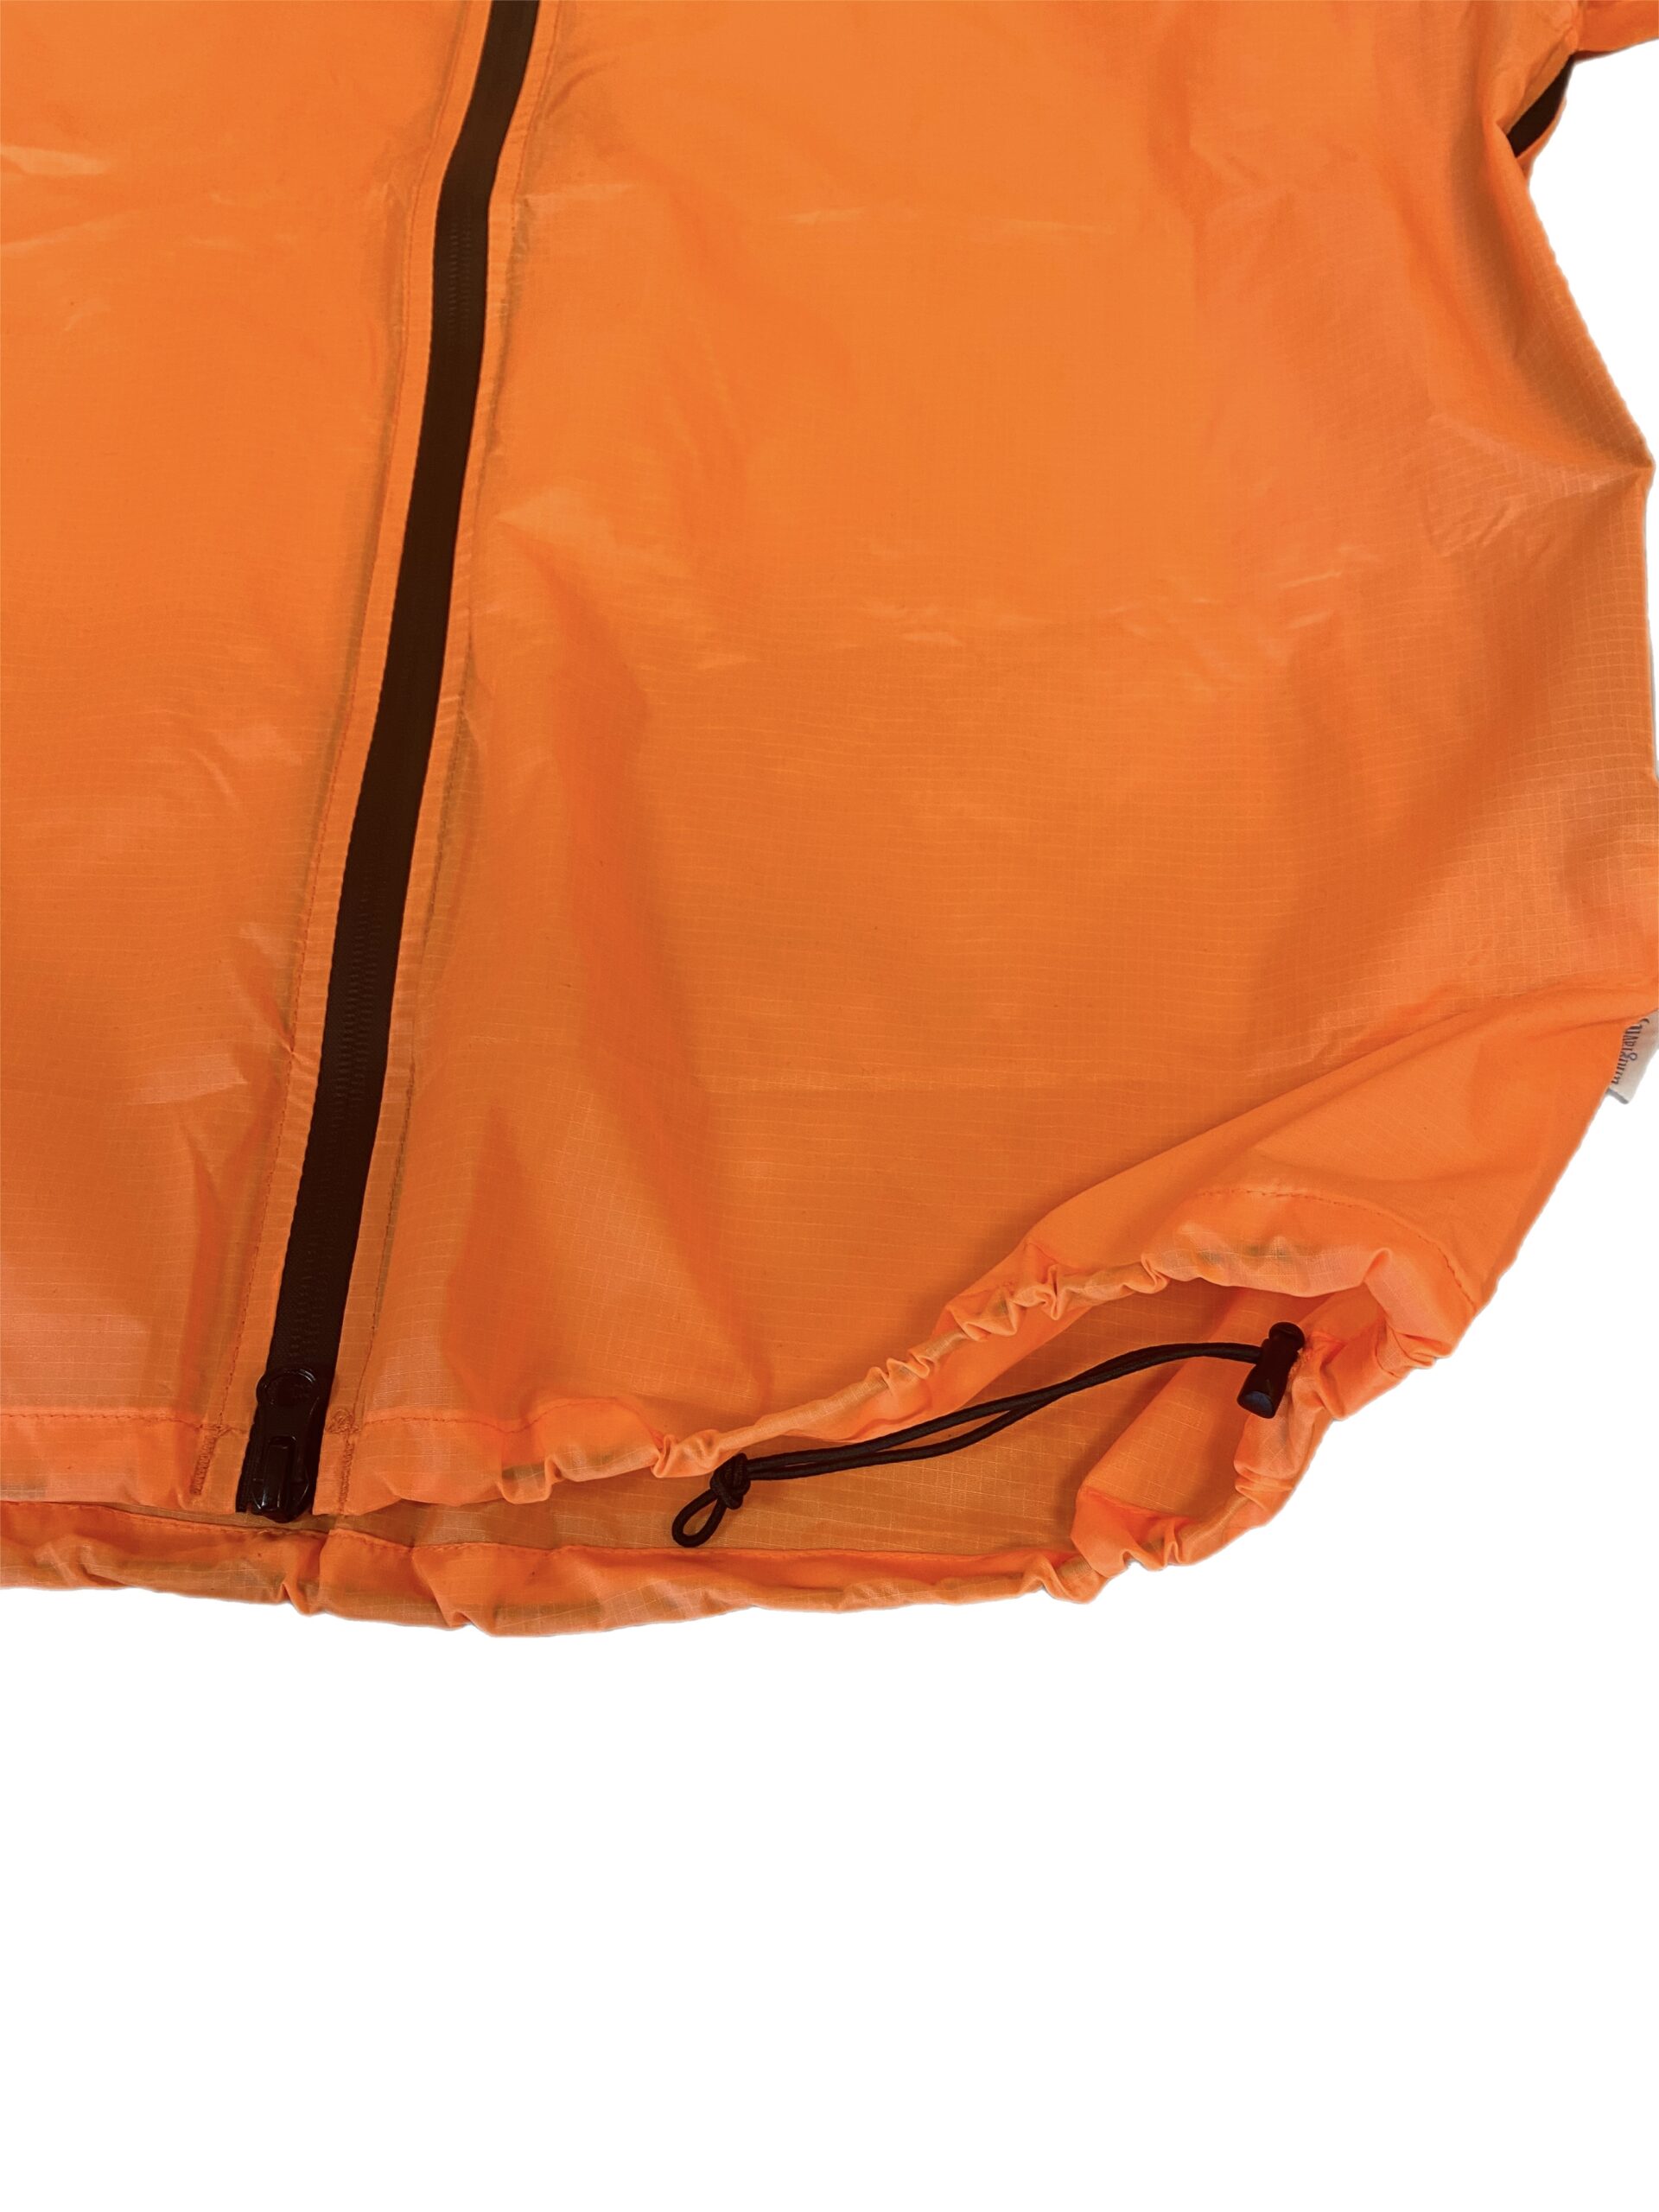 2.0 AntiGravityGear Ultralight Rain Jacket w/ Pit Zips | AntiGravityGear